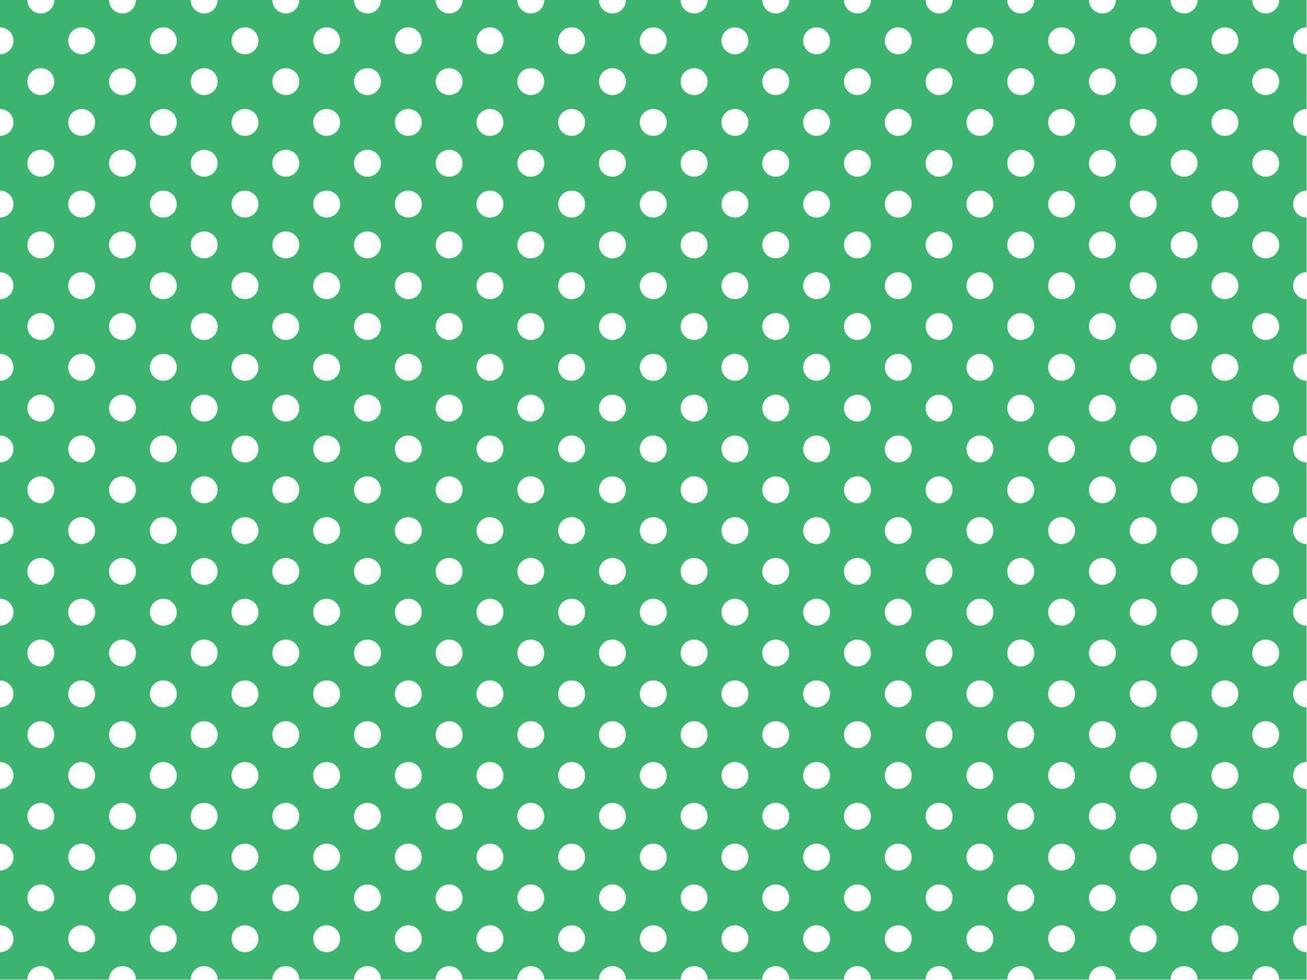 white polka dots over medium sea green background vector